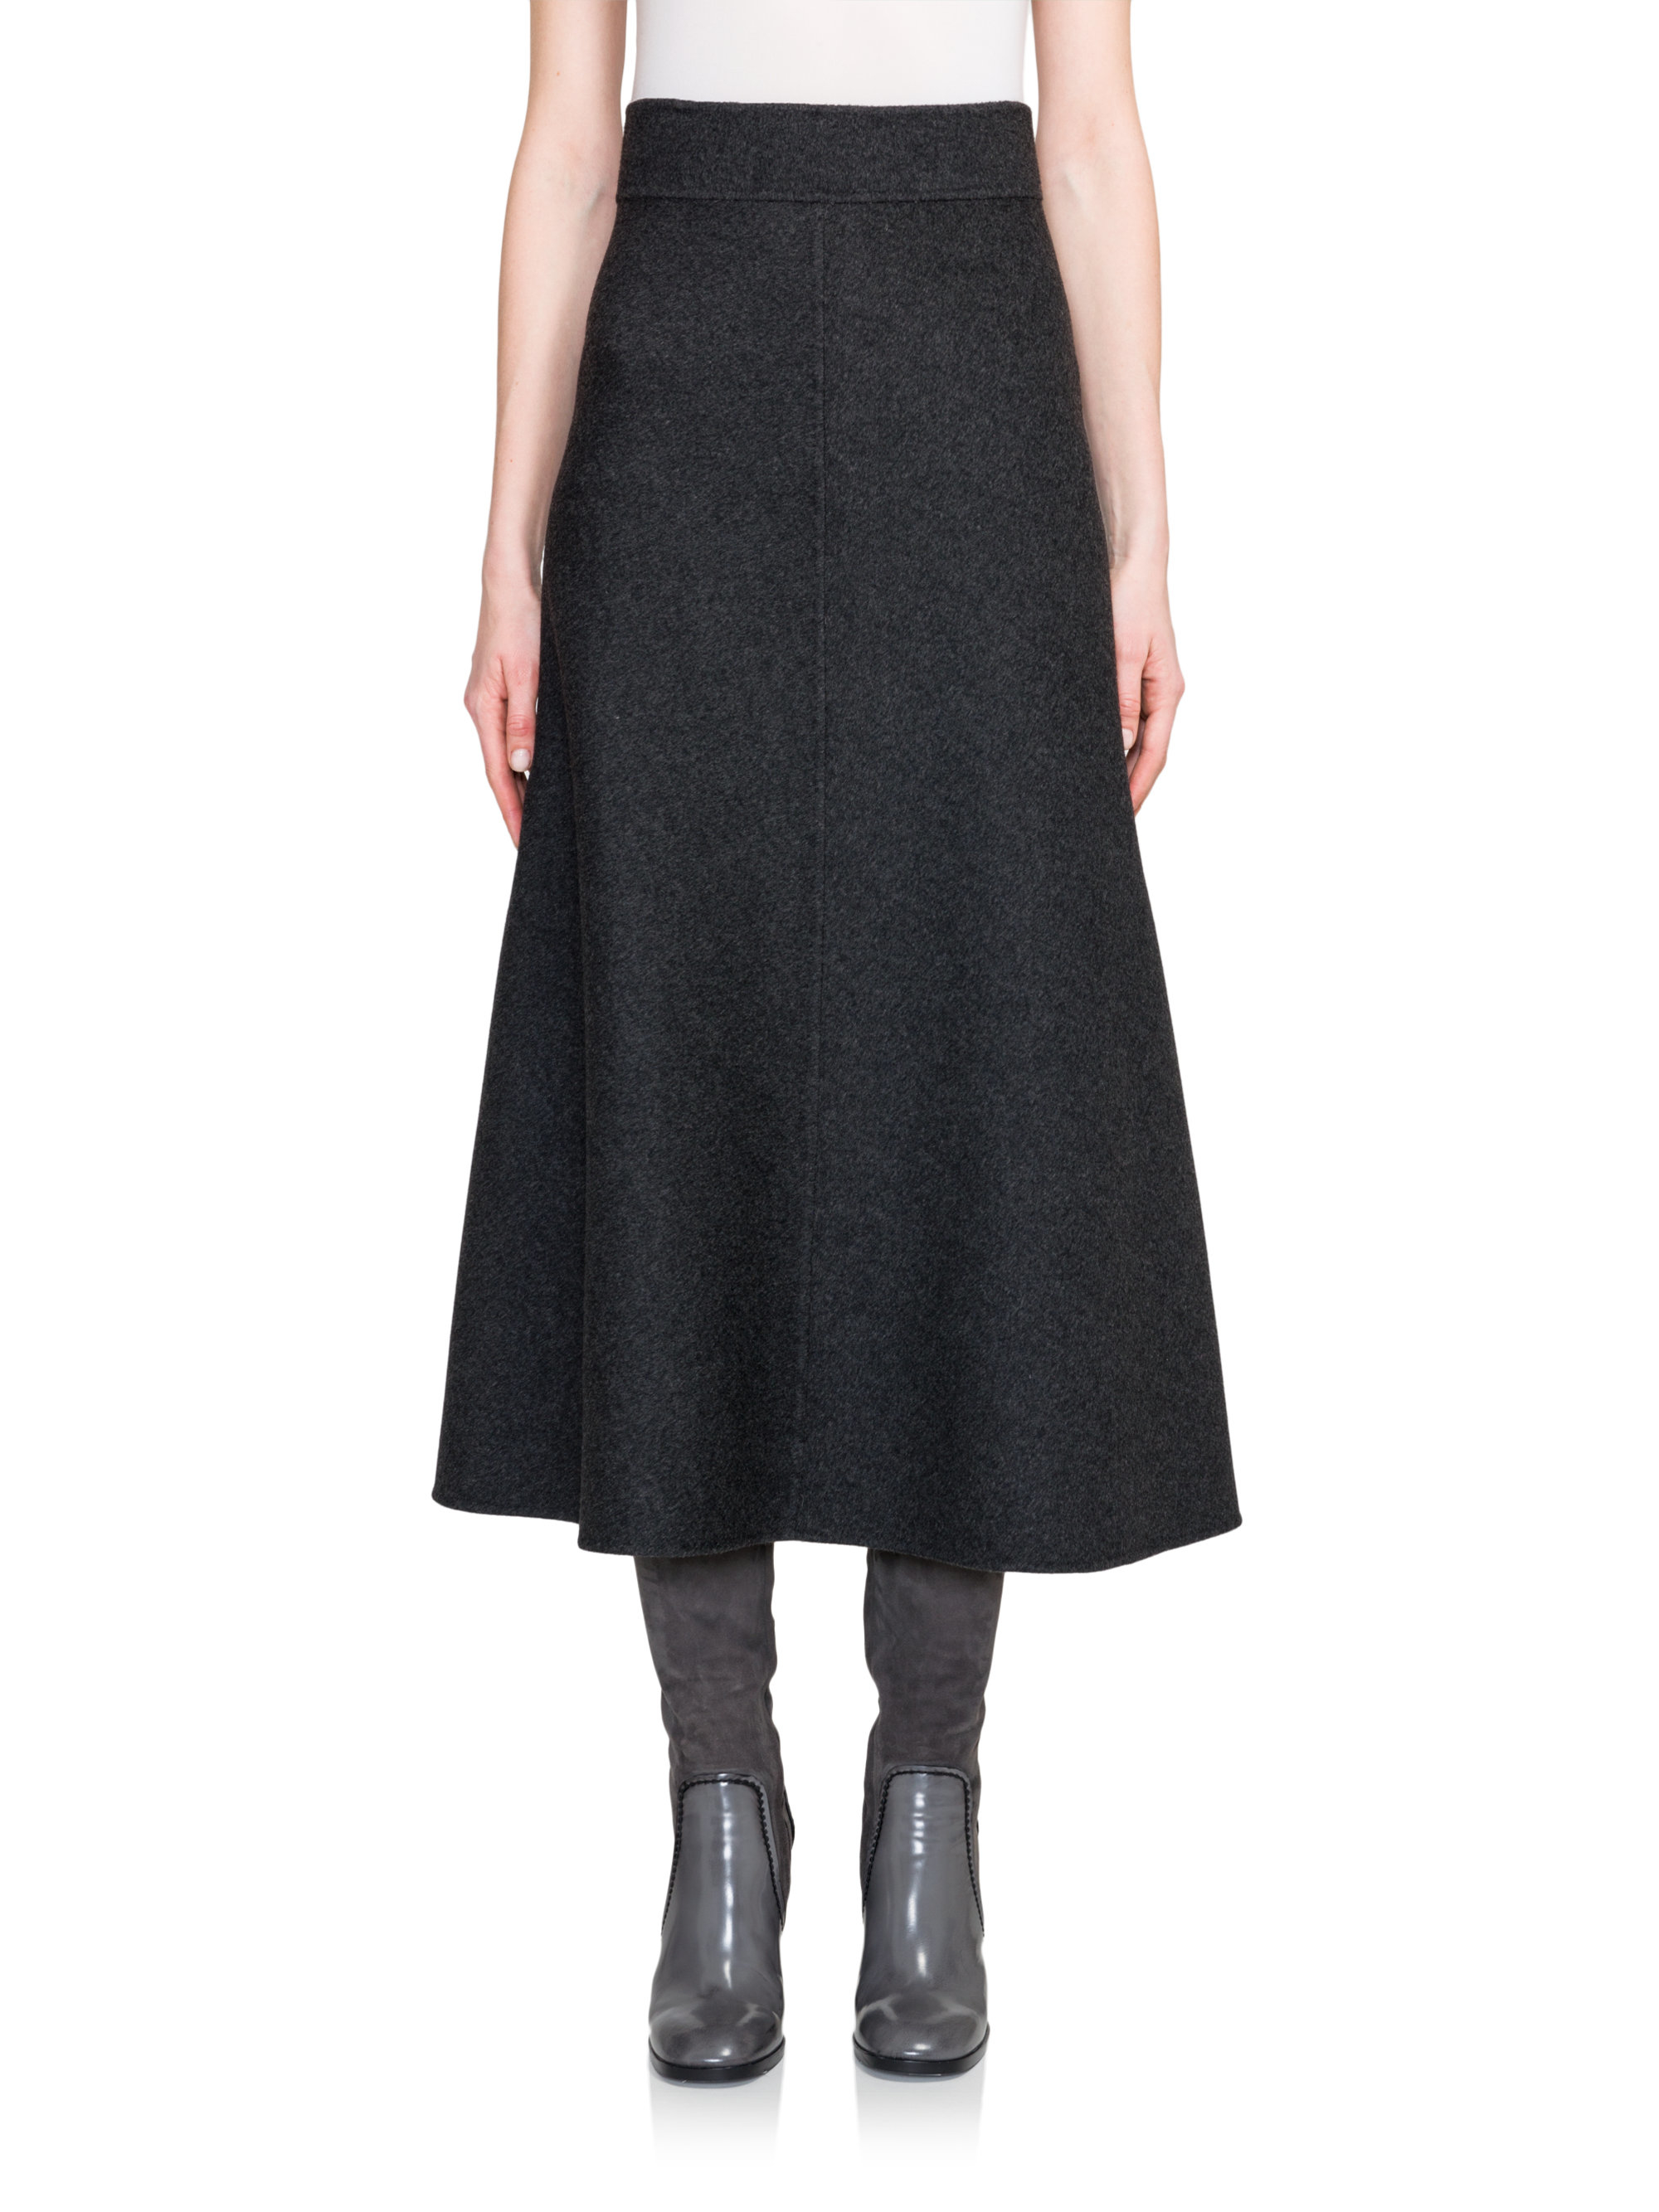 Jil Sander Vischio Wool & Cashmere A-line Skirt in Charcoal (Black) - Lyst